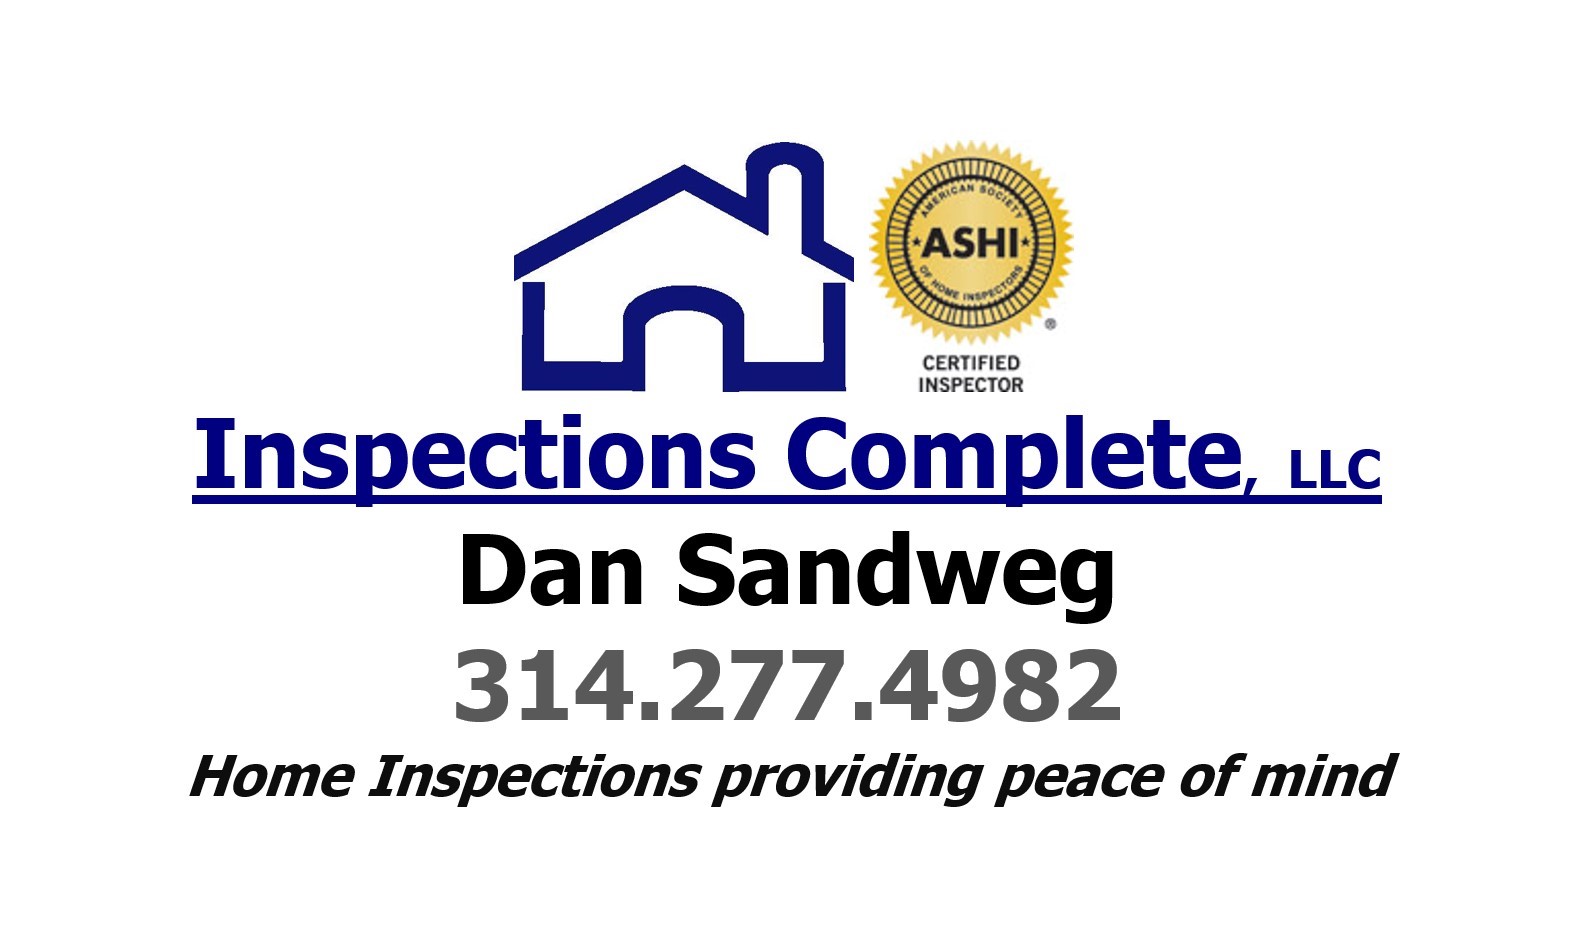 Dan Sandweg Ashi Certified Inspector American Society Of Home Inspectors Ashi